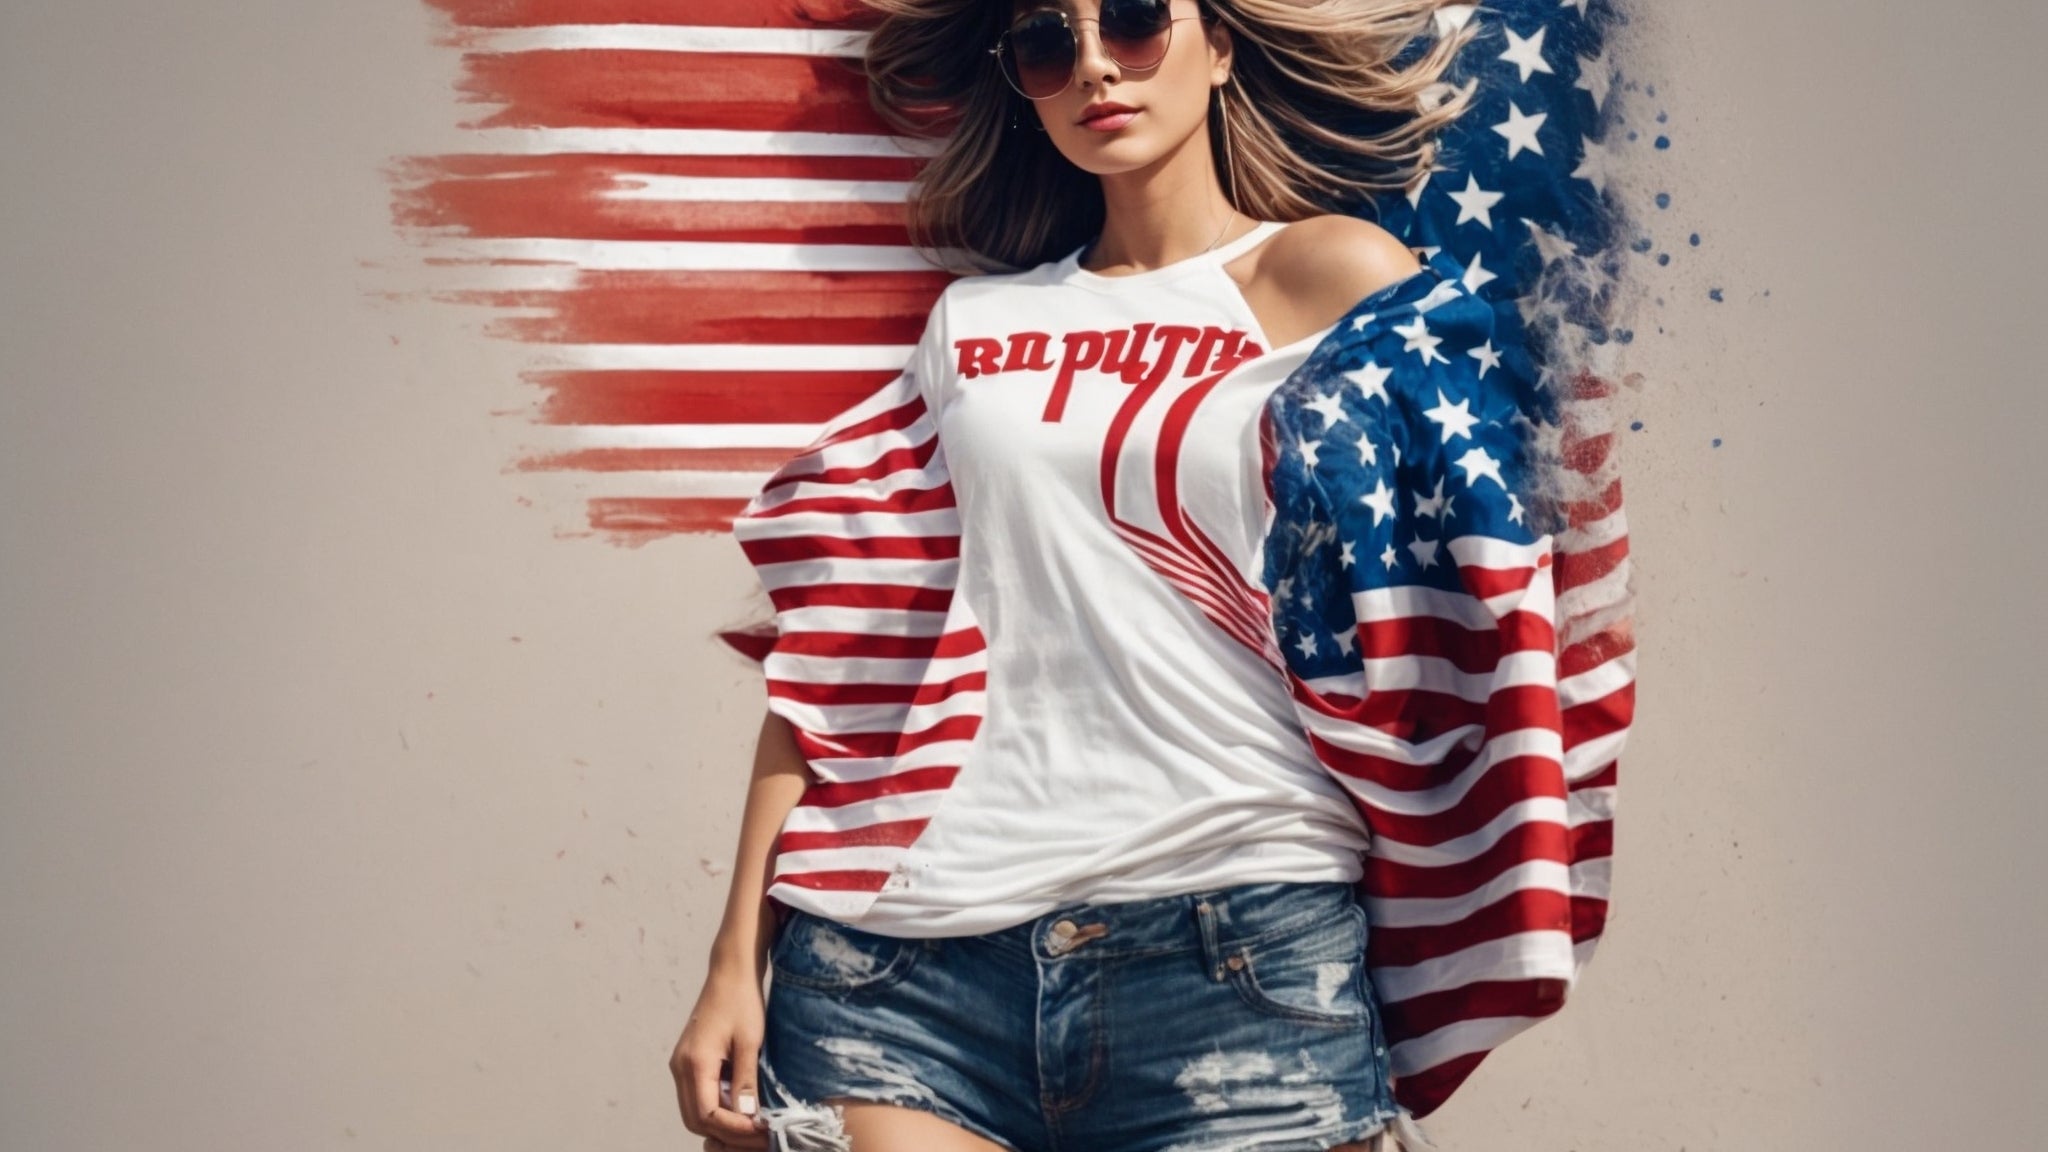 Izrazite svoj republikanski patriotizam elegantnim majicama za Trumpove pristaše